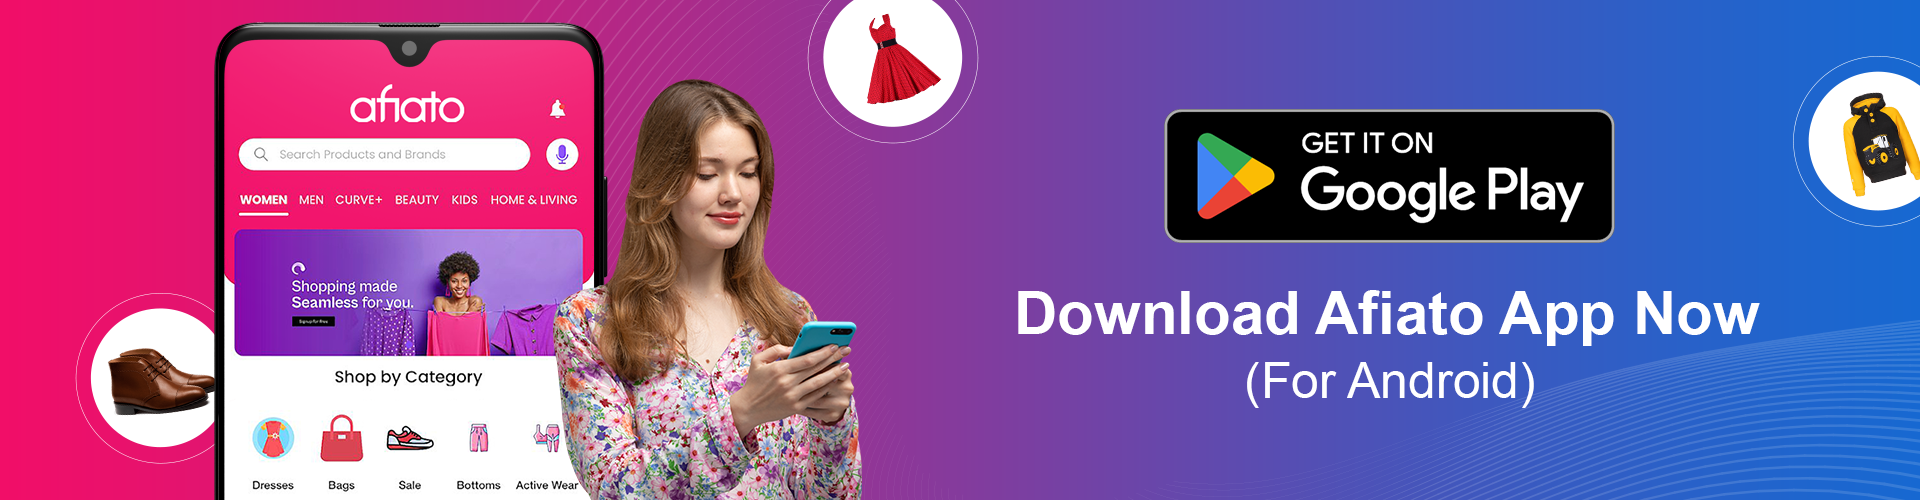 download the afiato app now